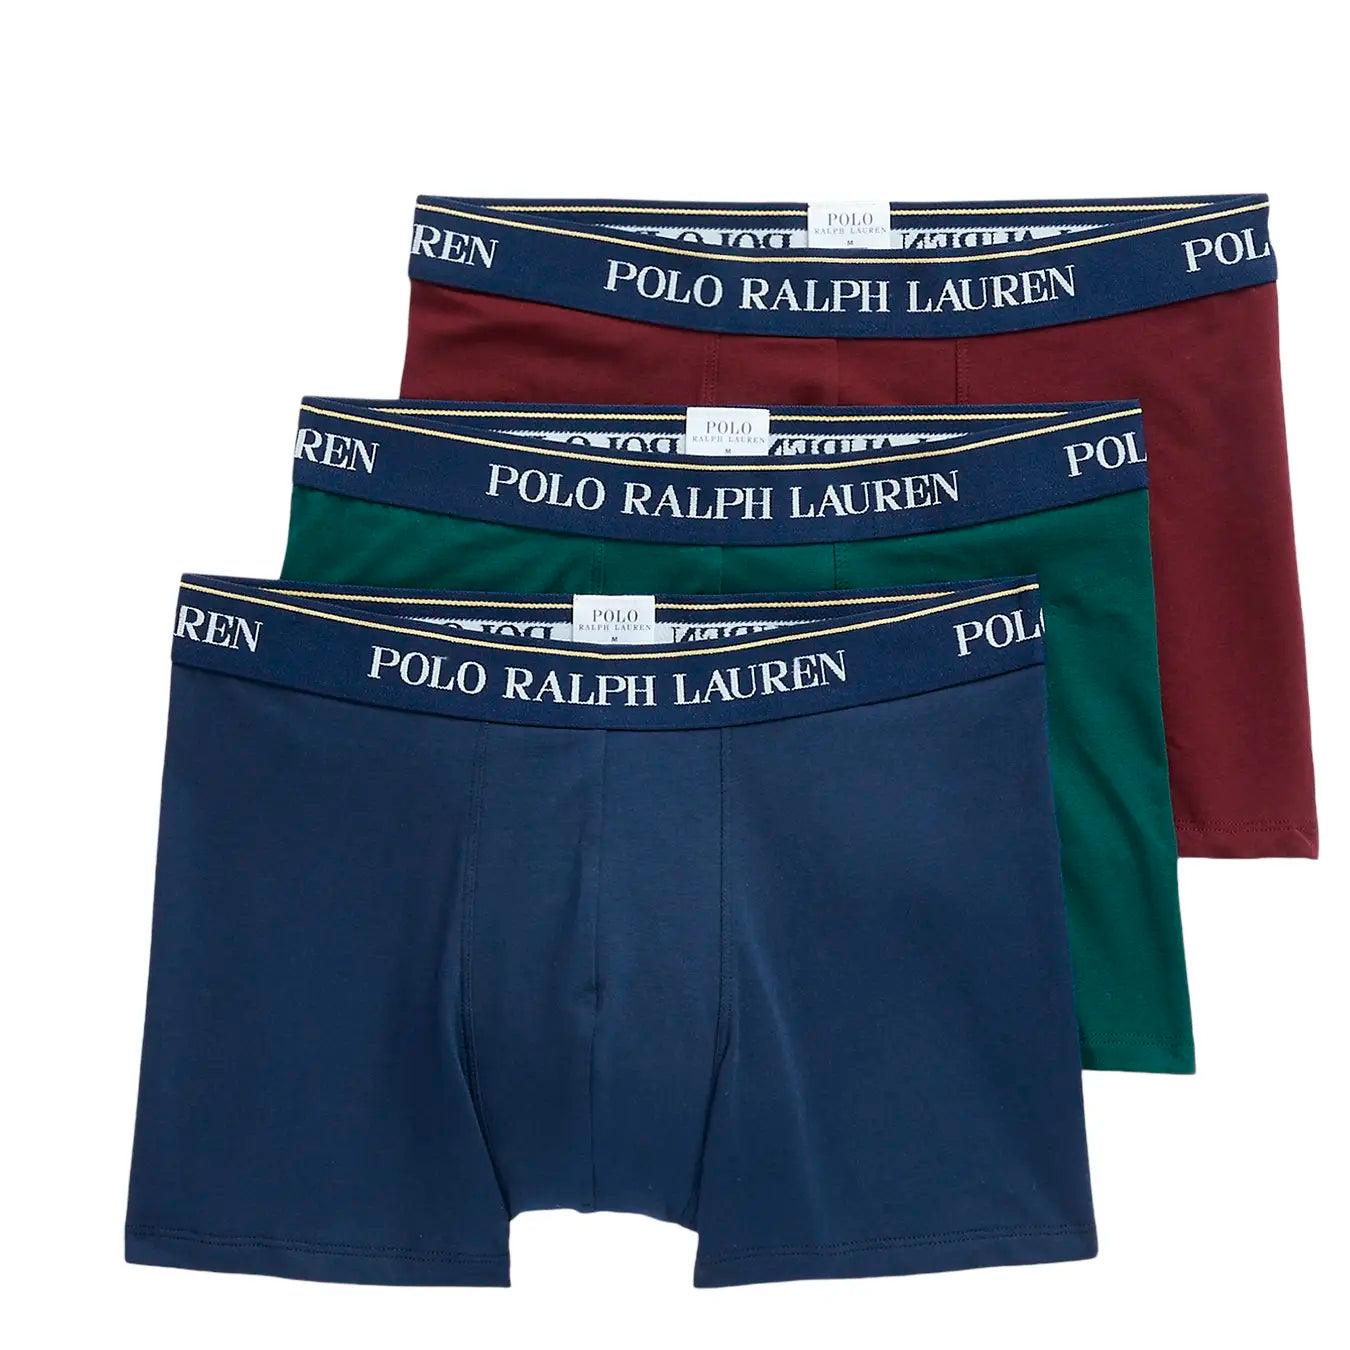 Polo Ralph Lauren Boxer, 714830299, Clssic Trunk 3 Pack Trunk, 067grn Rich Rub, Bassiniboutique.it,&#x20;